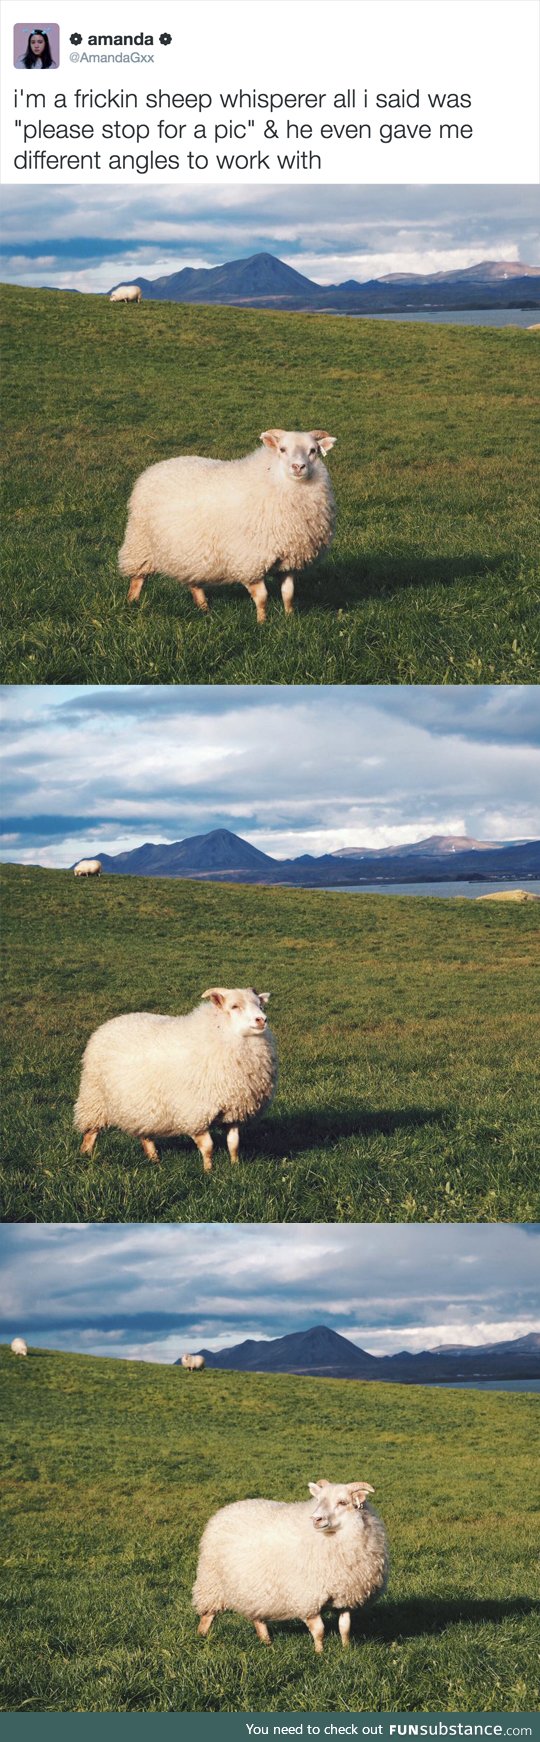 Most photogenic sheep